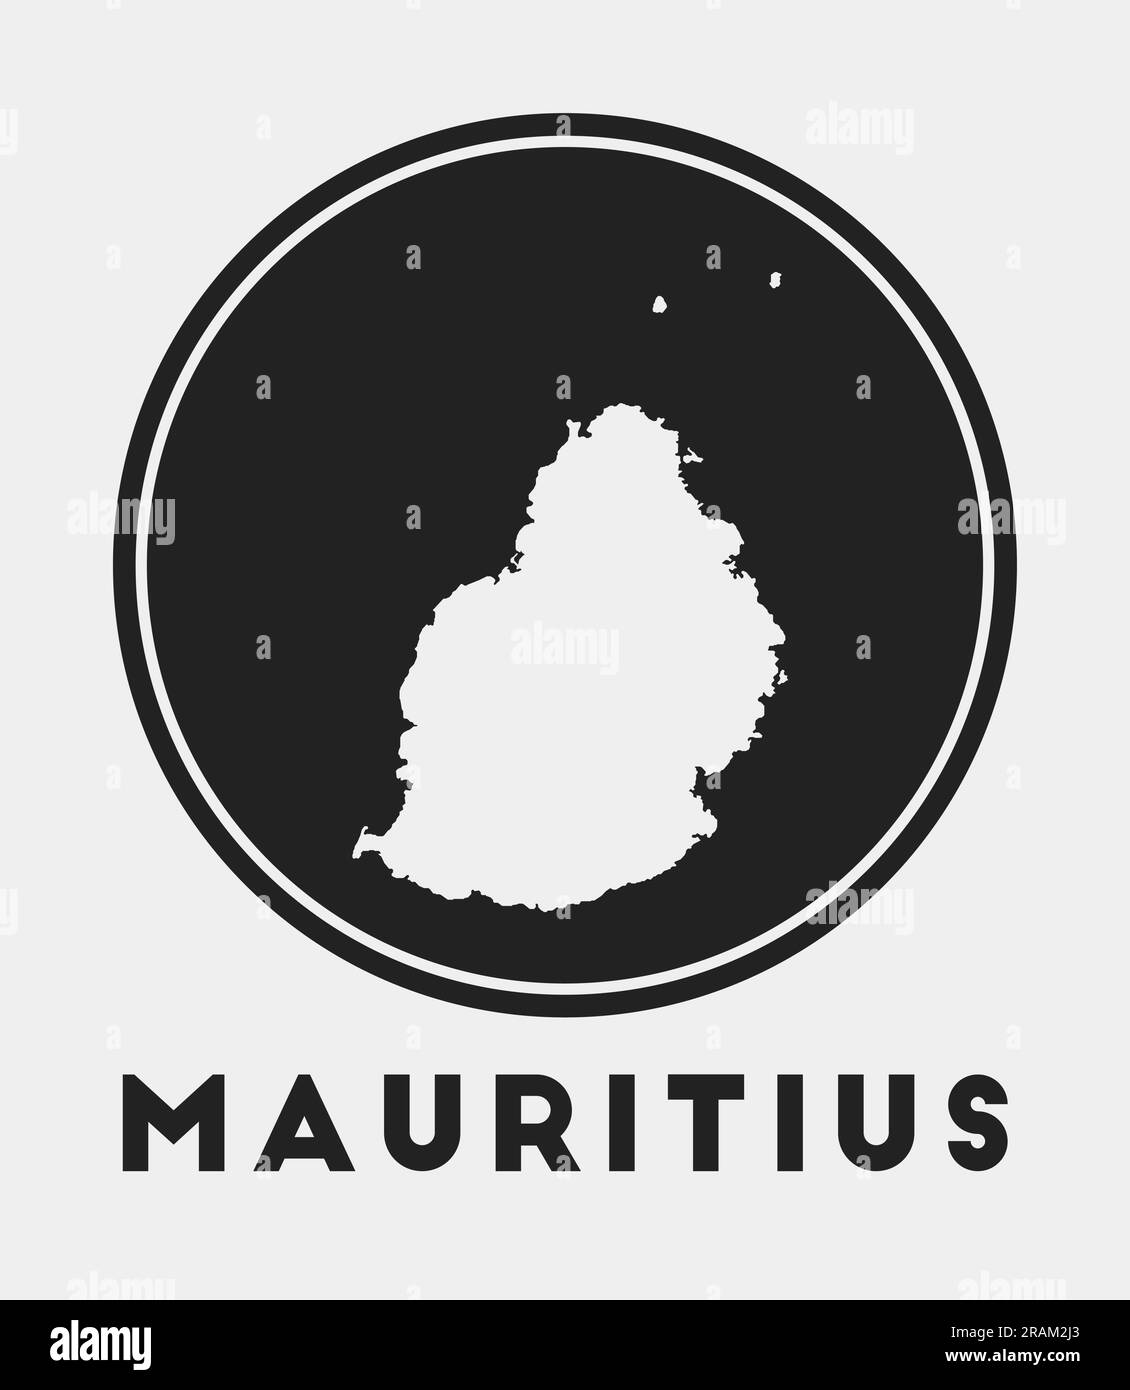 Mauritius icon. Round logo with island map and title. Stylish Mauritius ...